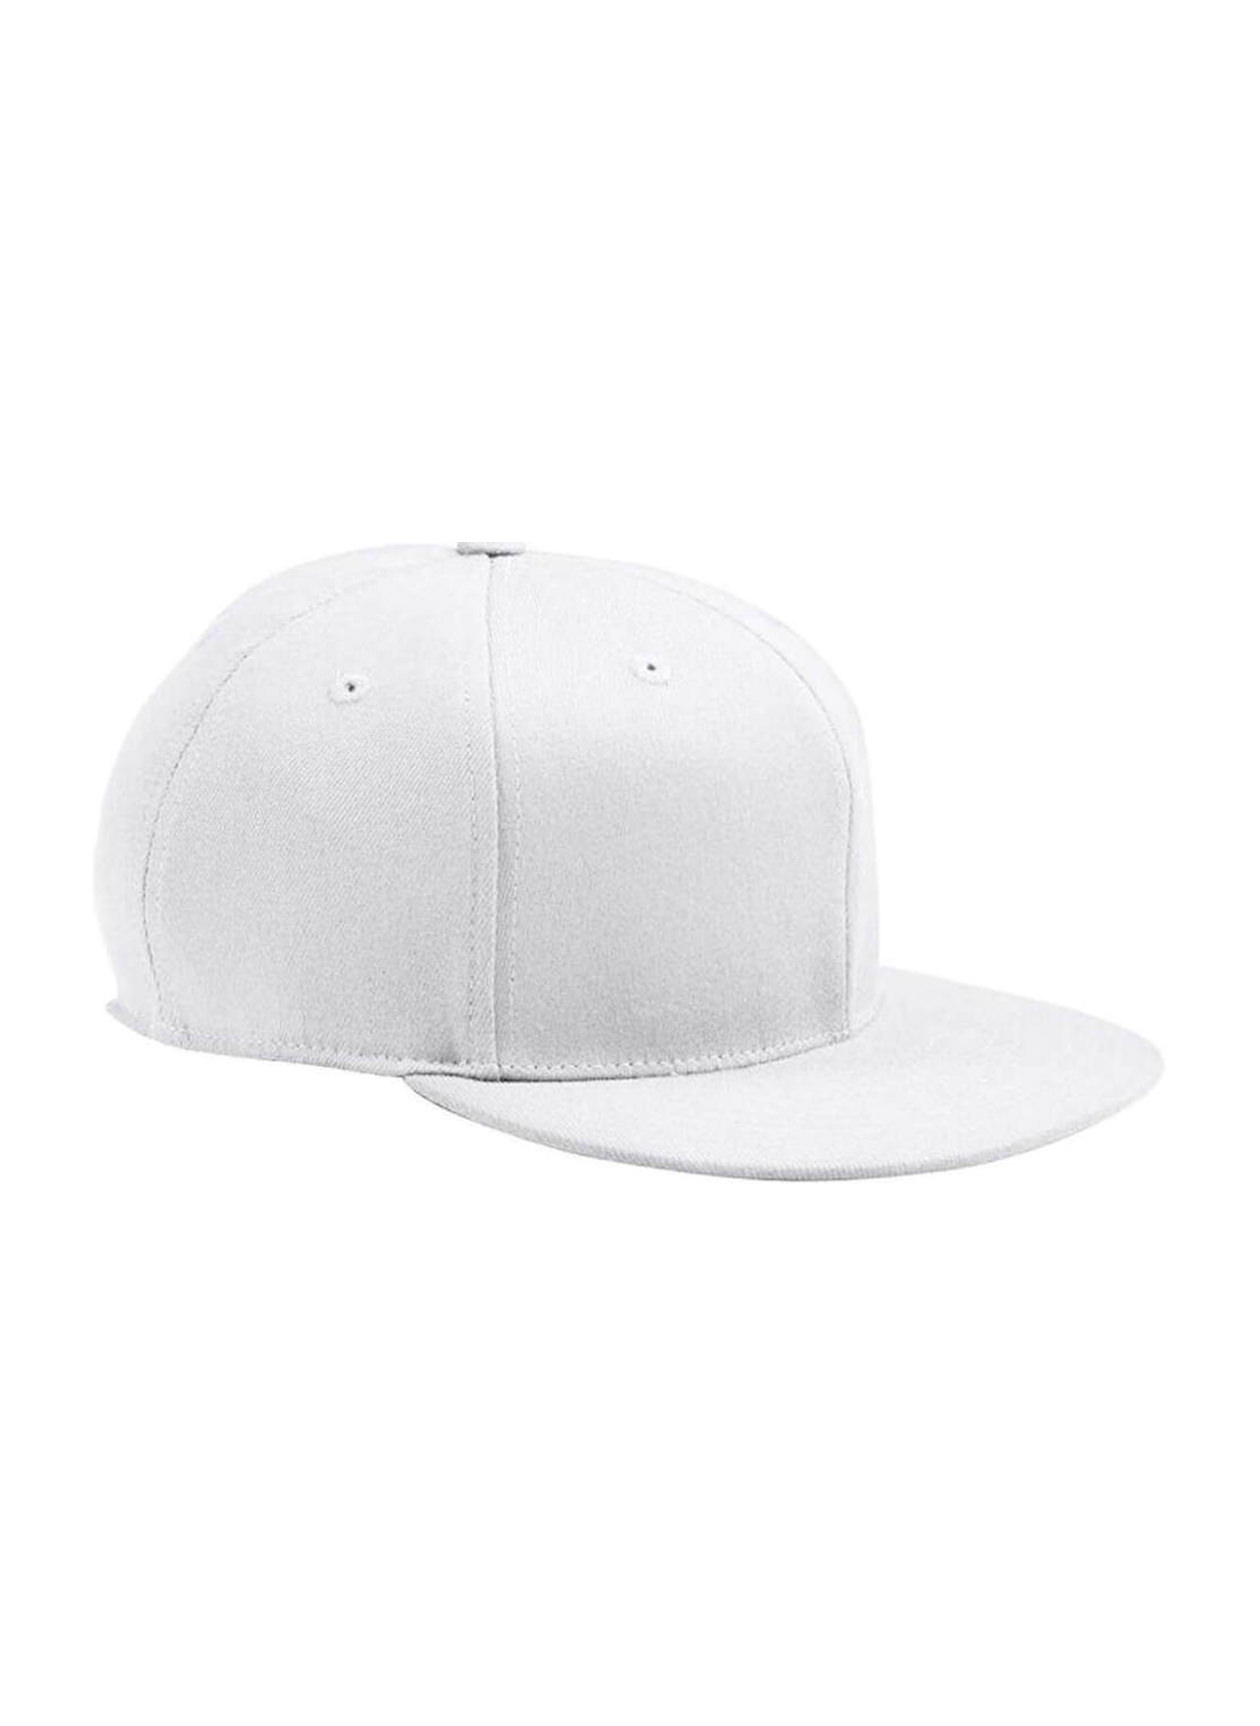 Hat Premium | Flexfit Fitted White 210 Flexfit